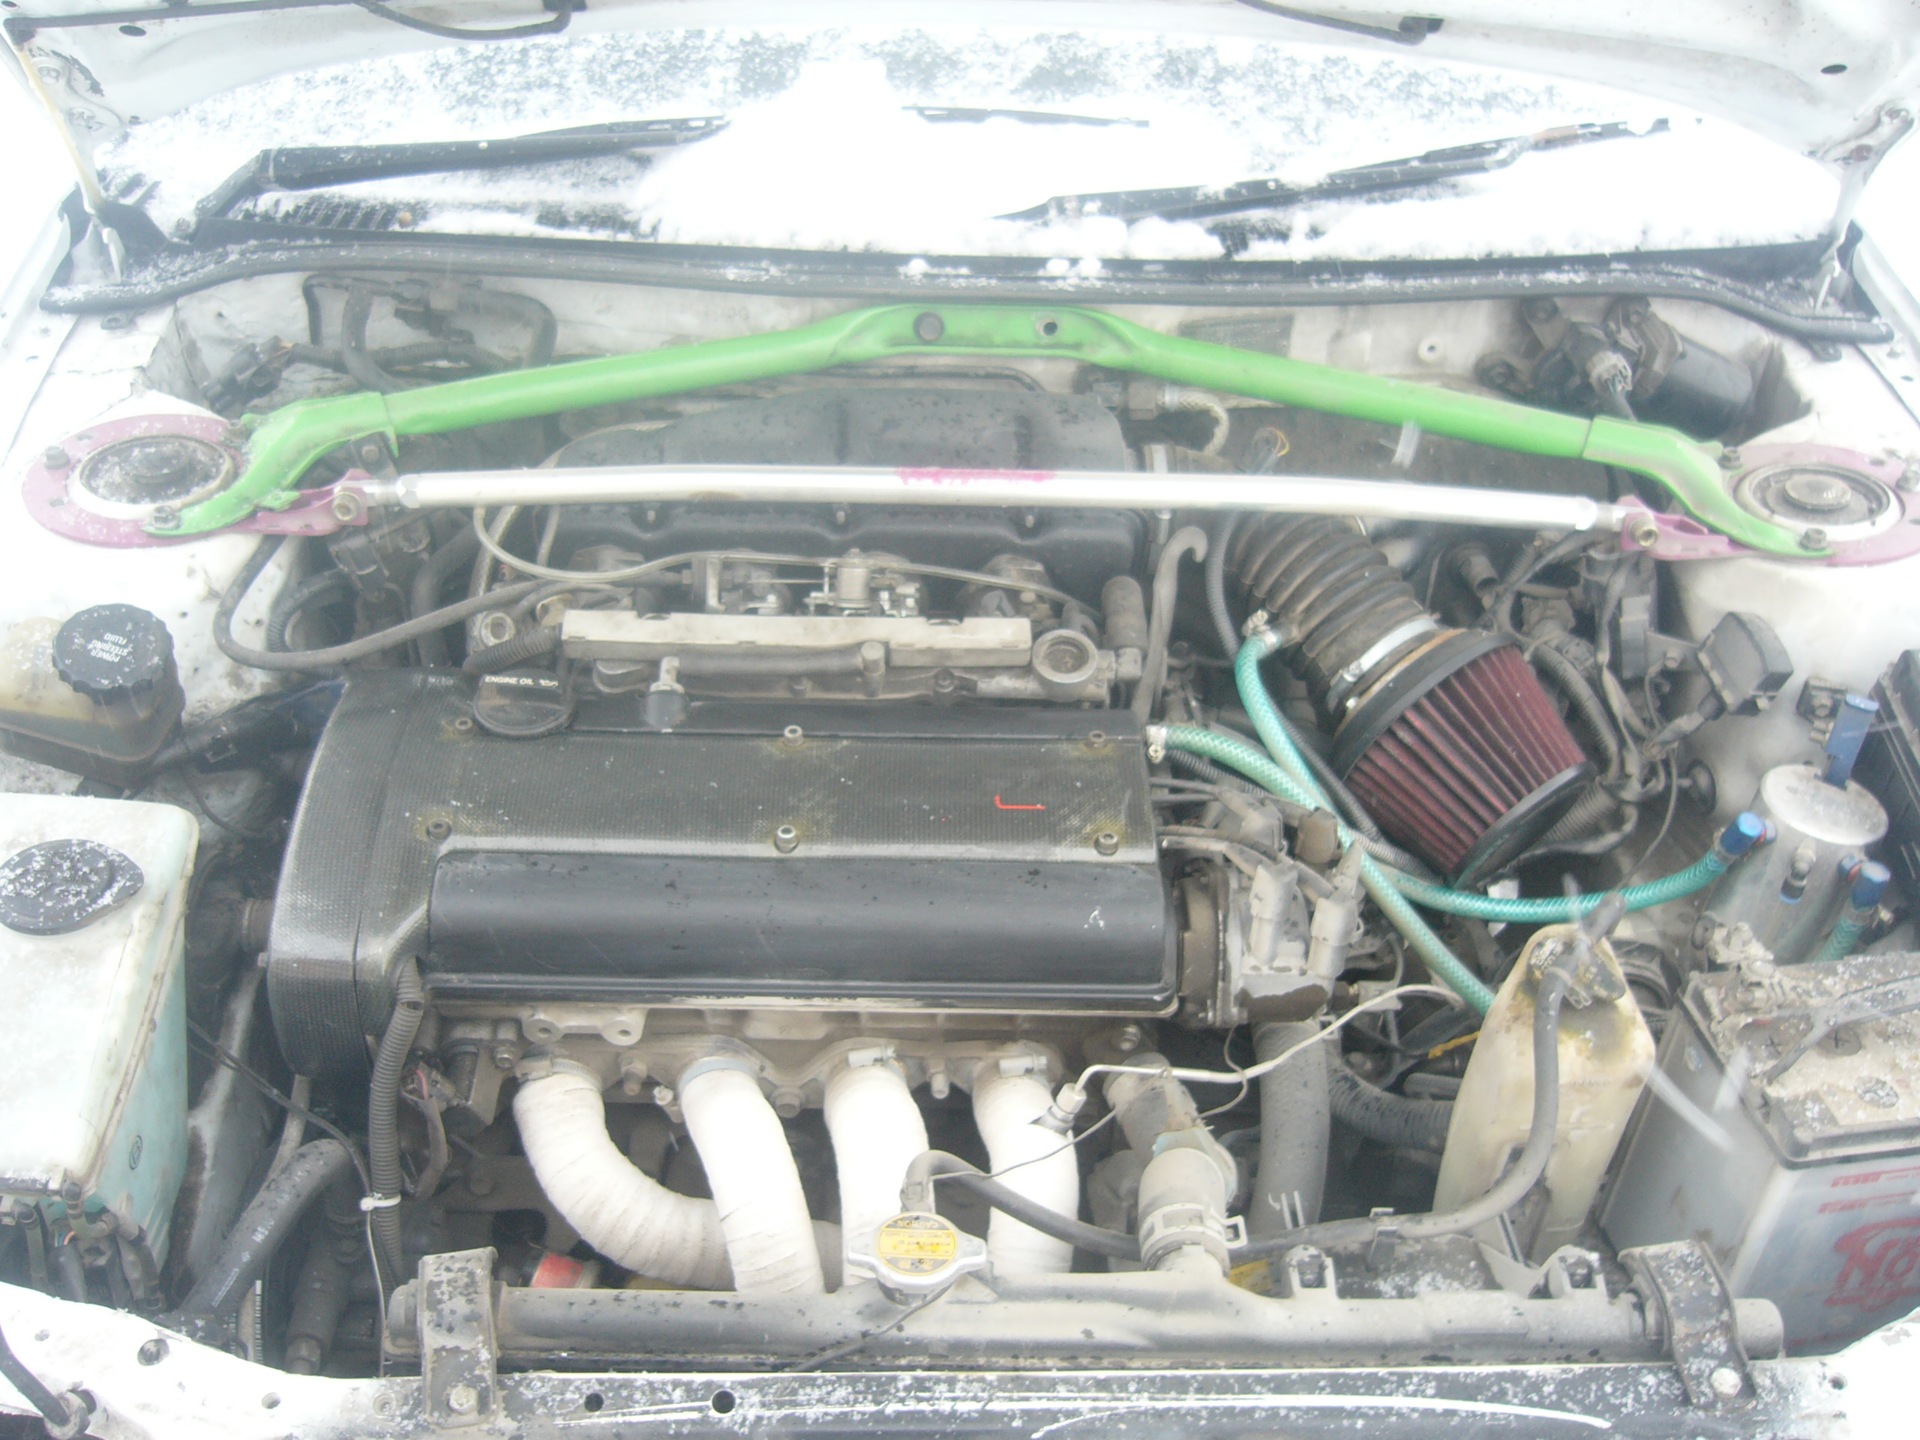 Carbon Fiber Covers - Toyota Corolla Levin 16L 1993